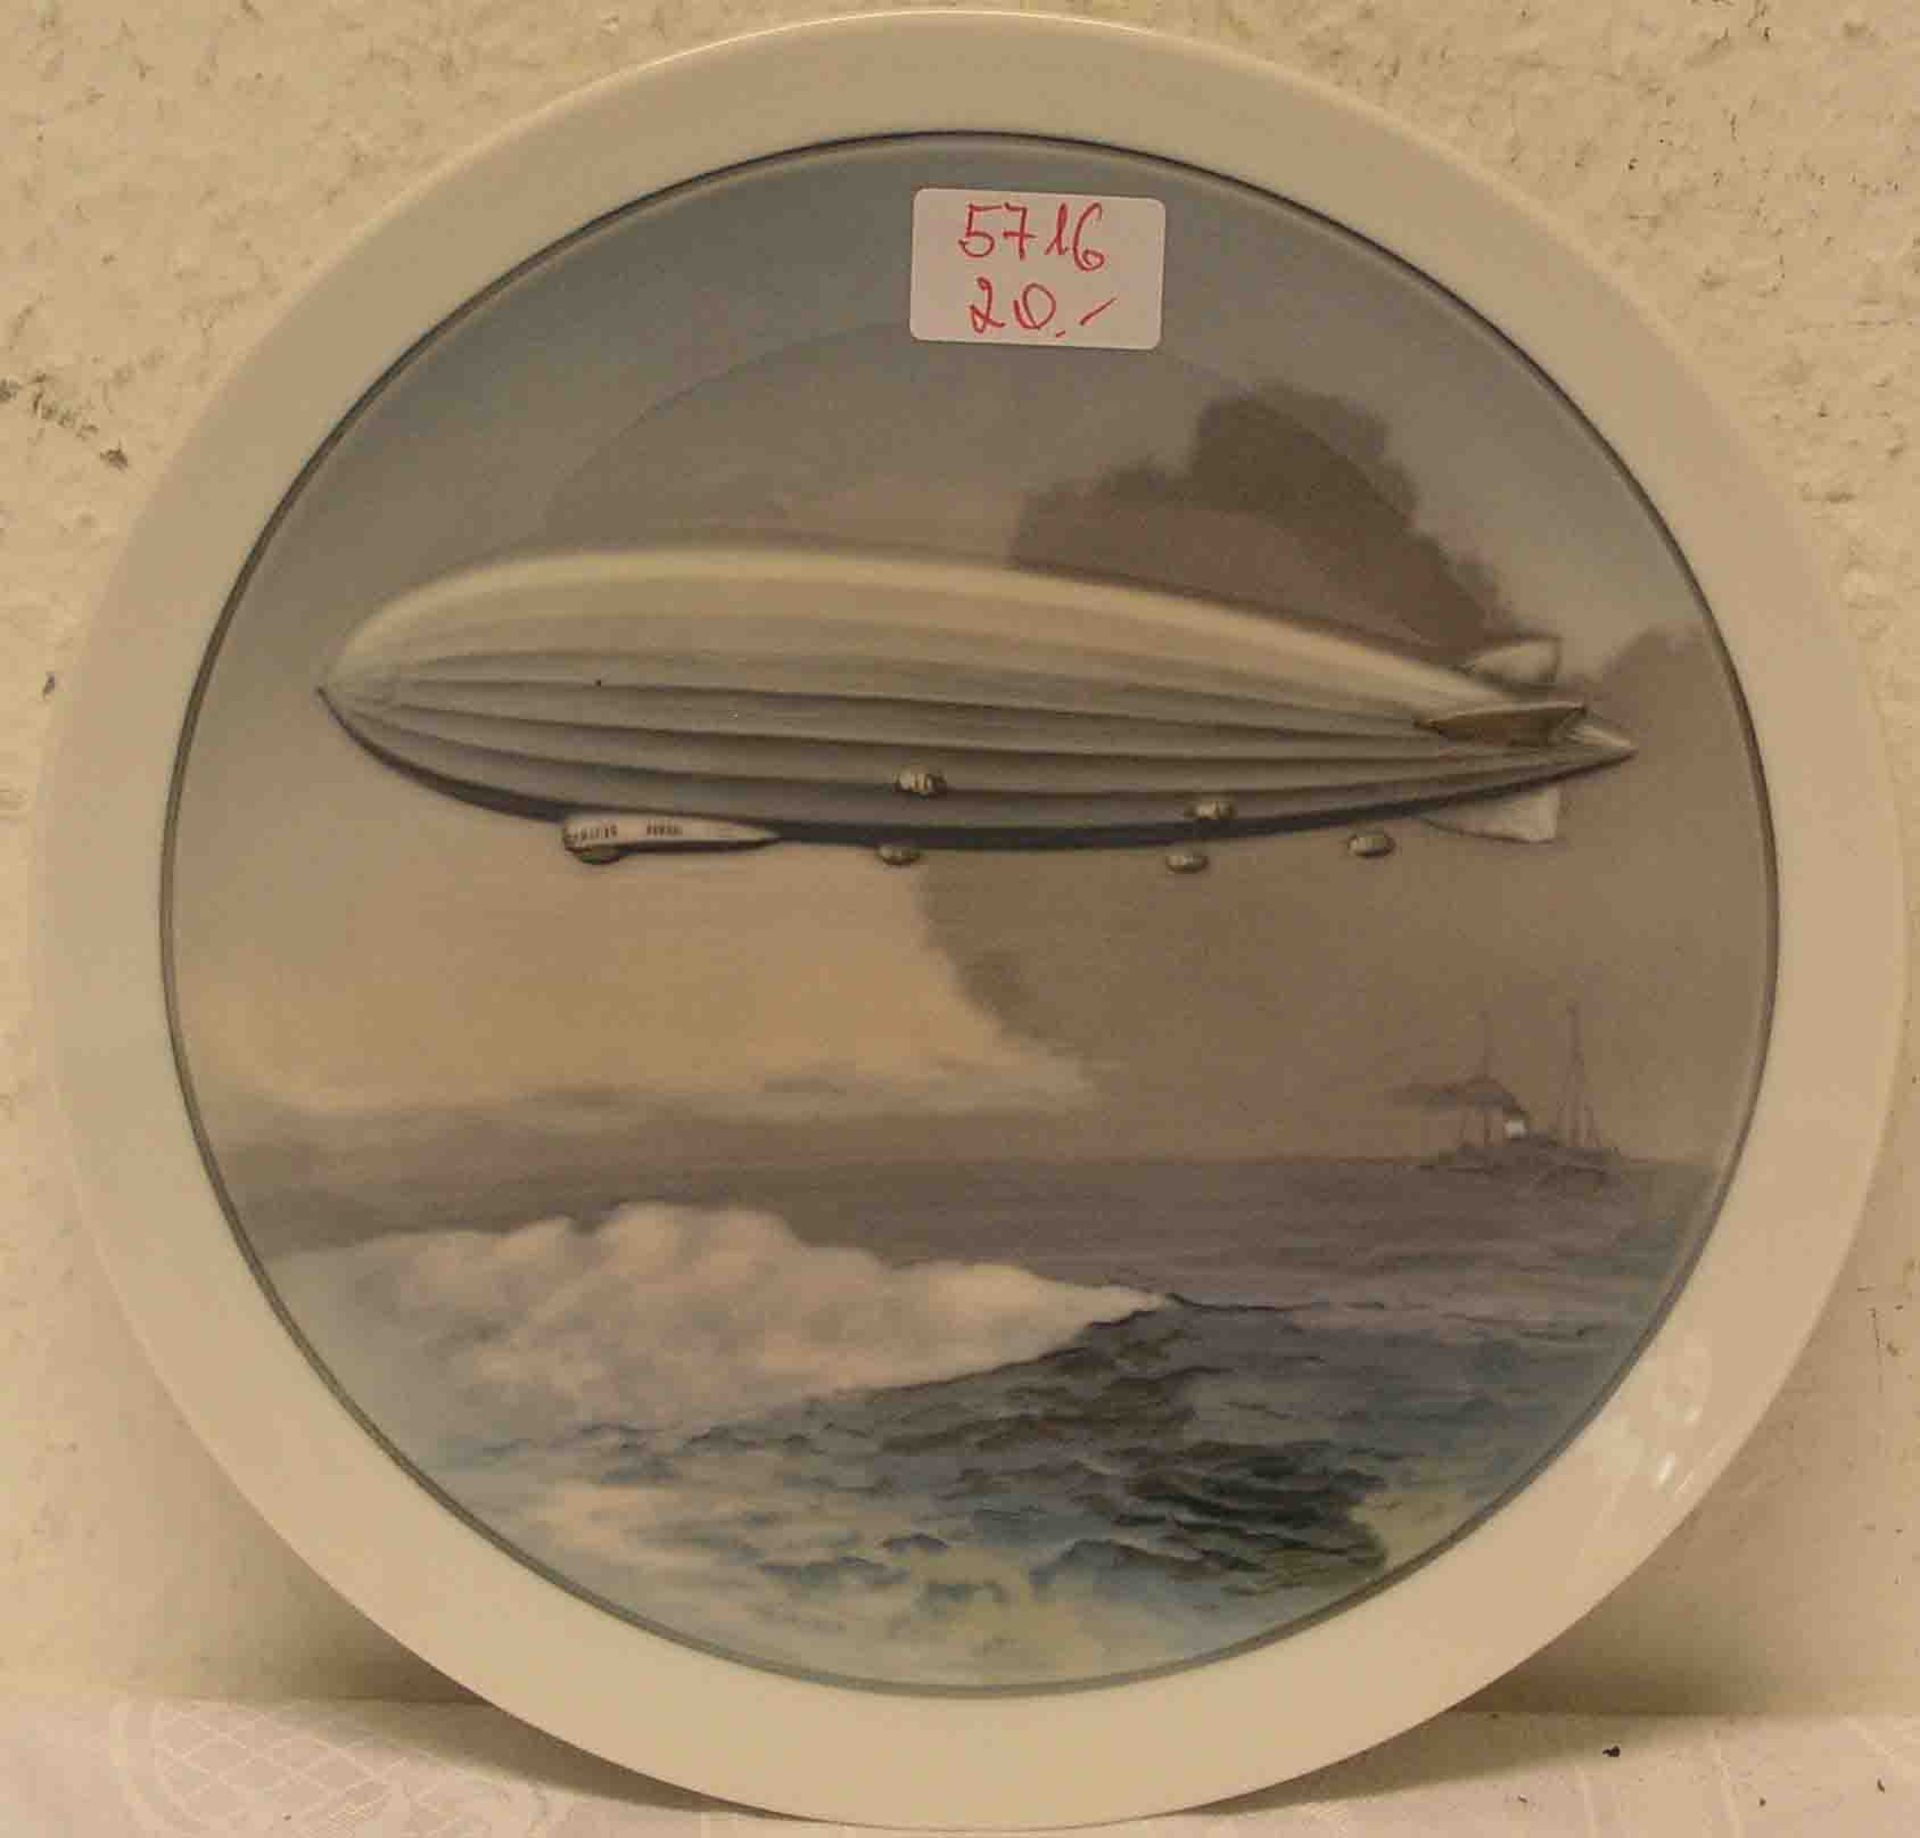 Erinnerungsteller "Zeppelin". Rosenthal Porzellan, Durchmesser 21,5cm.